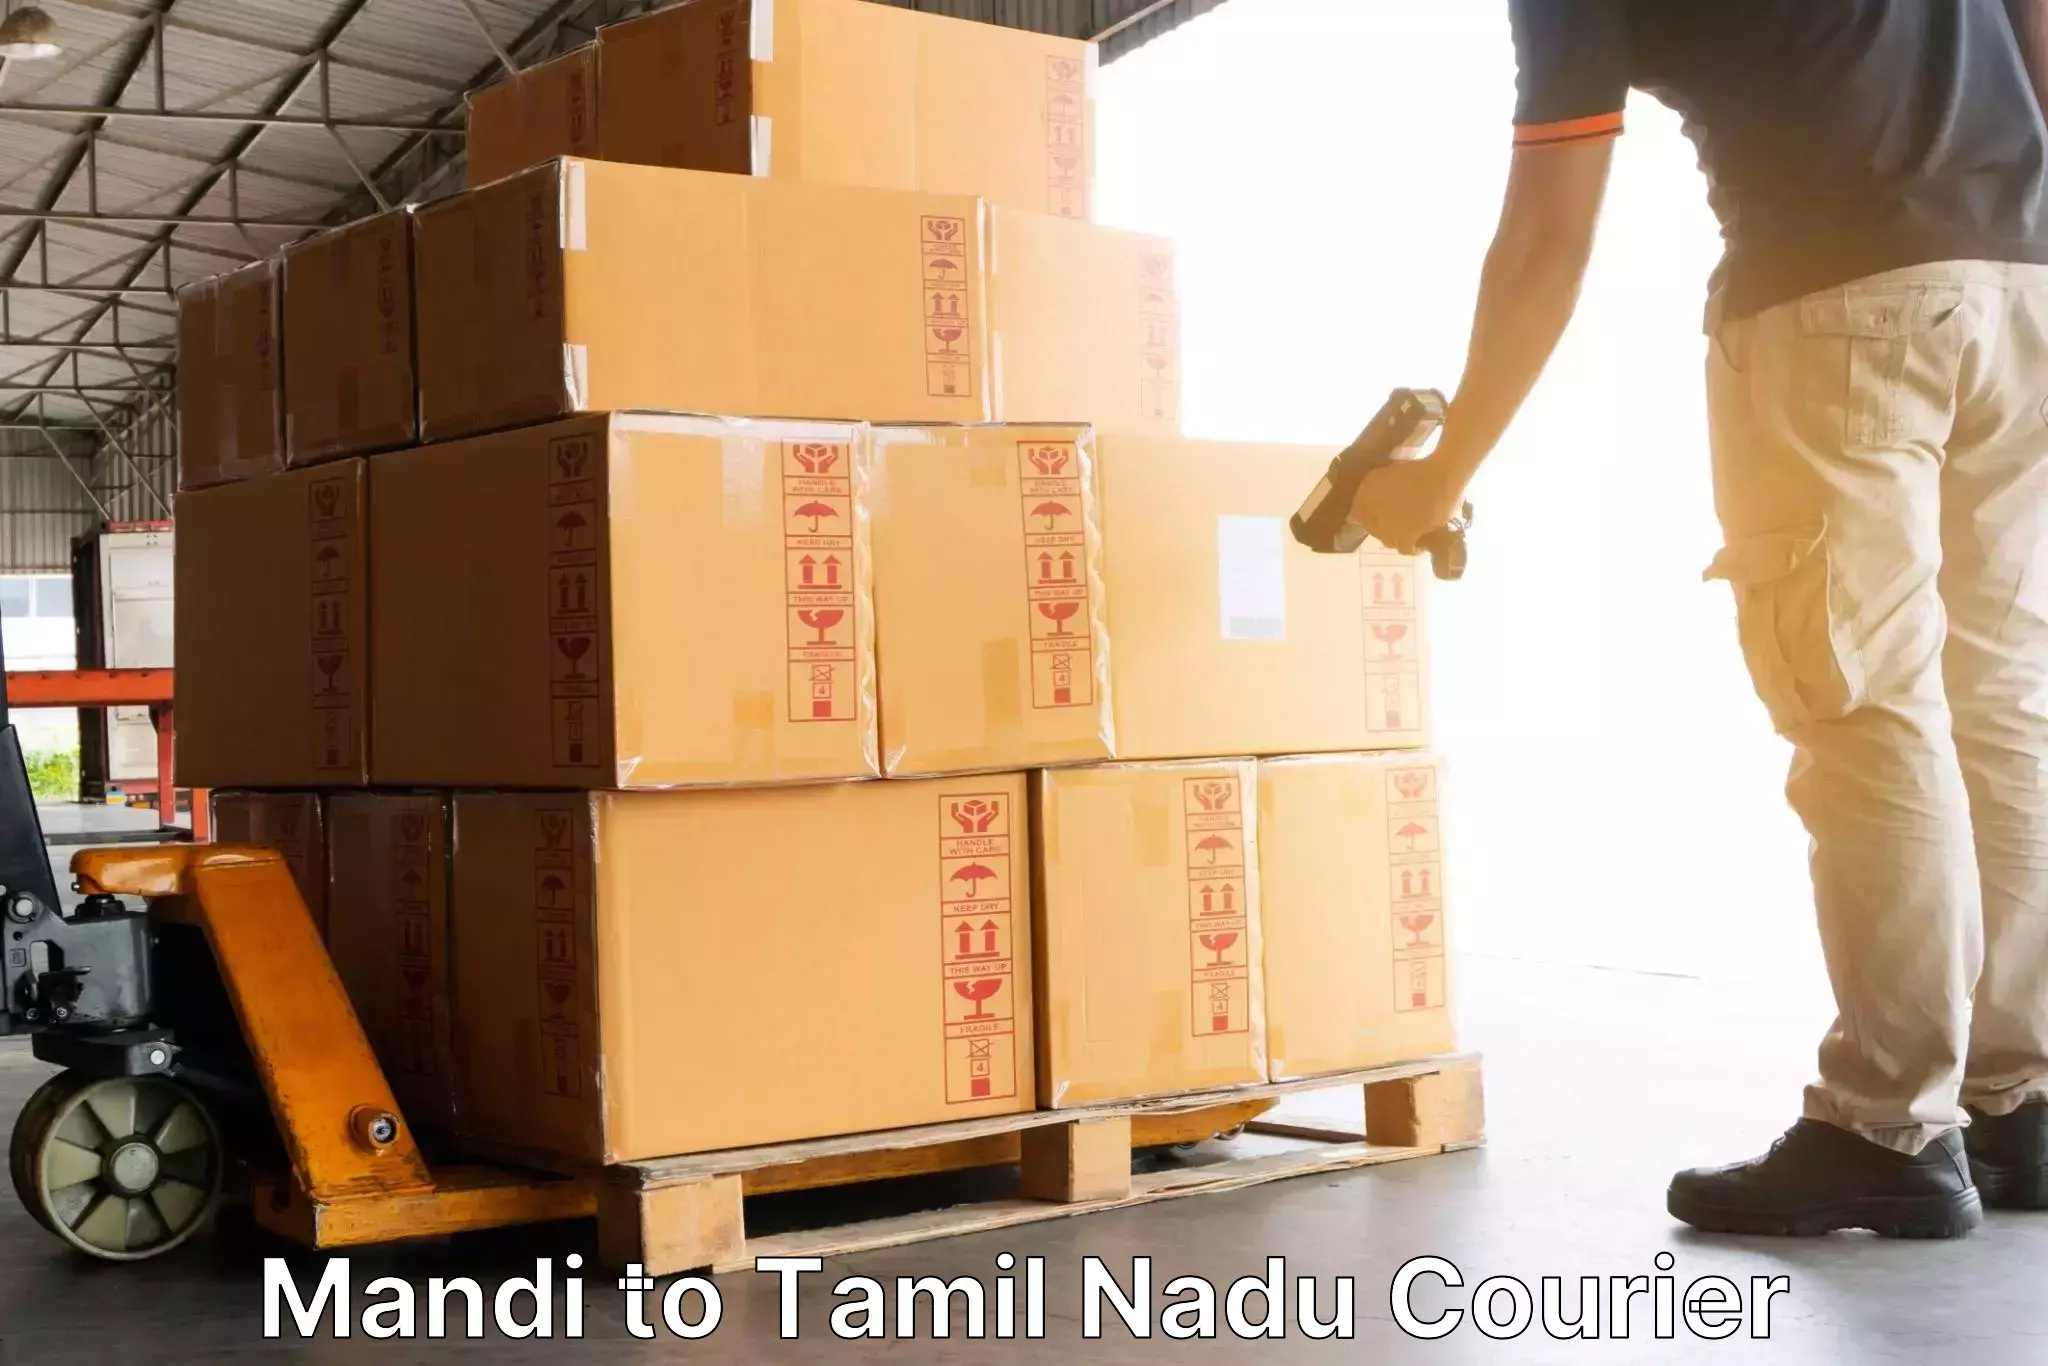 Speedy delivery service Mandi to Ennore Port Chennai